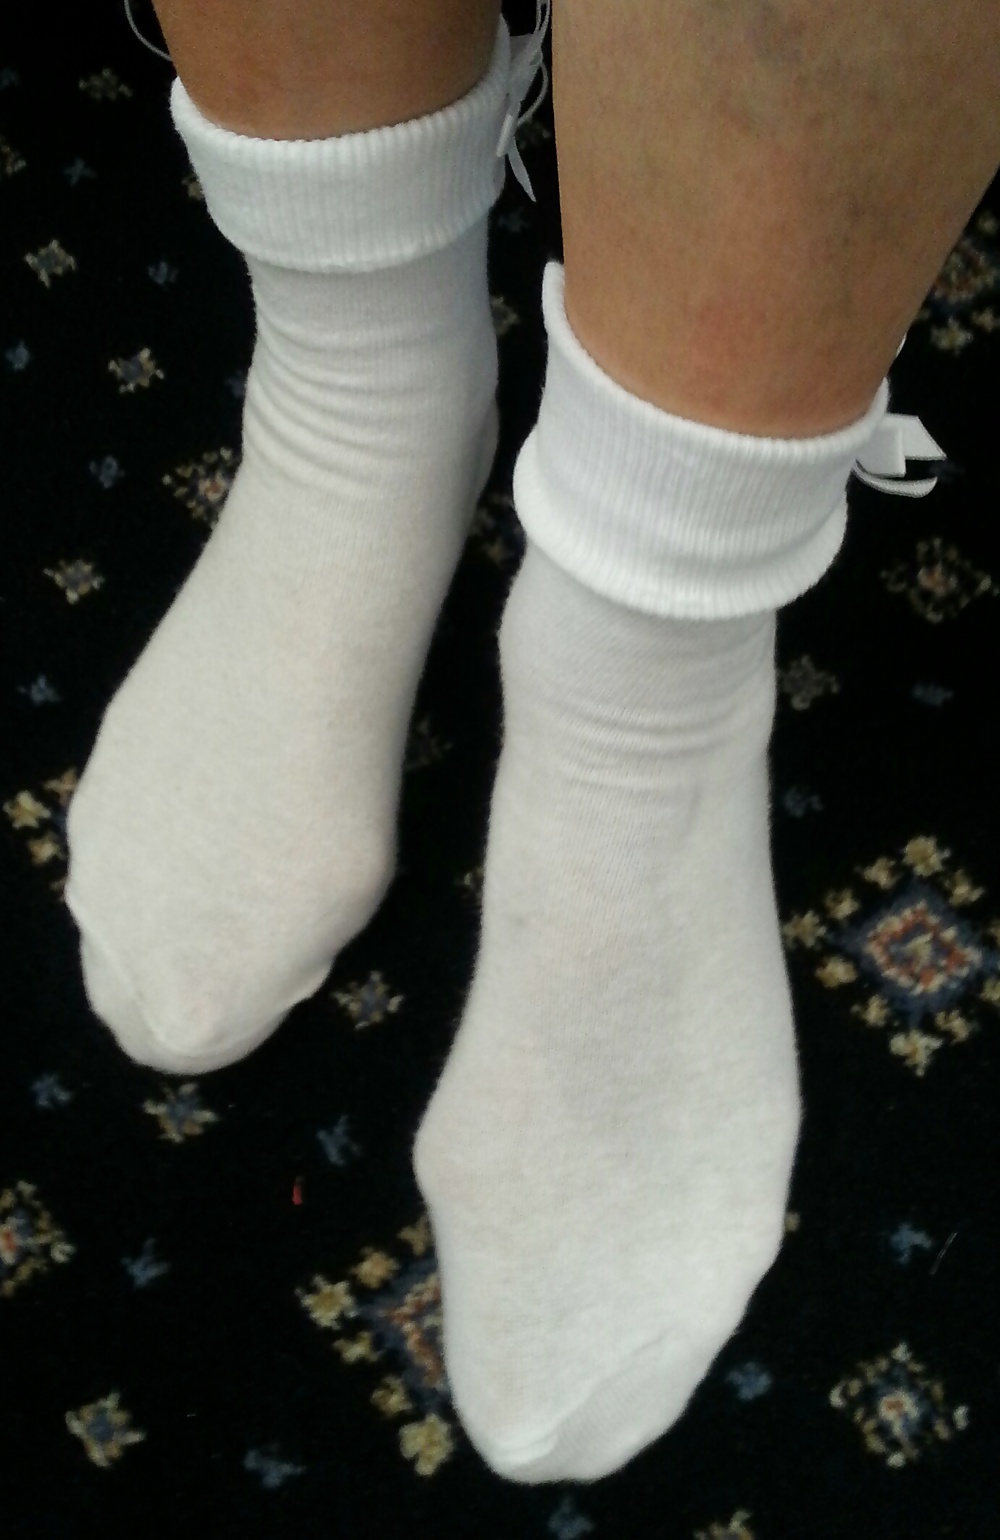 Kt white socks and all  #28340312